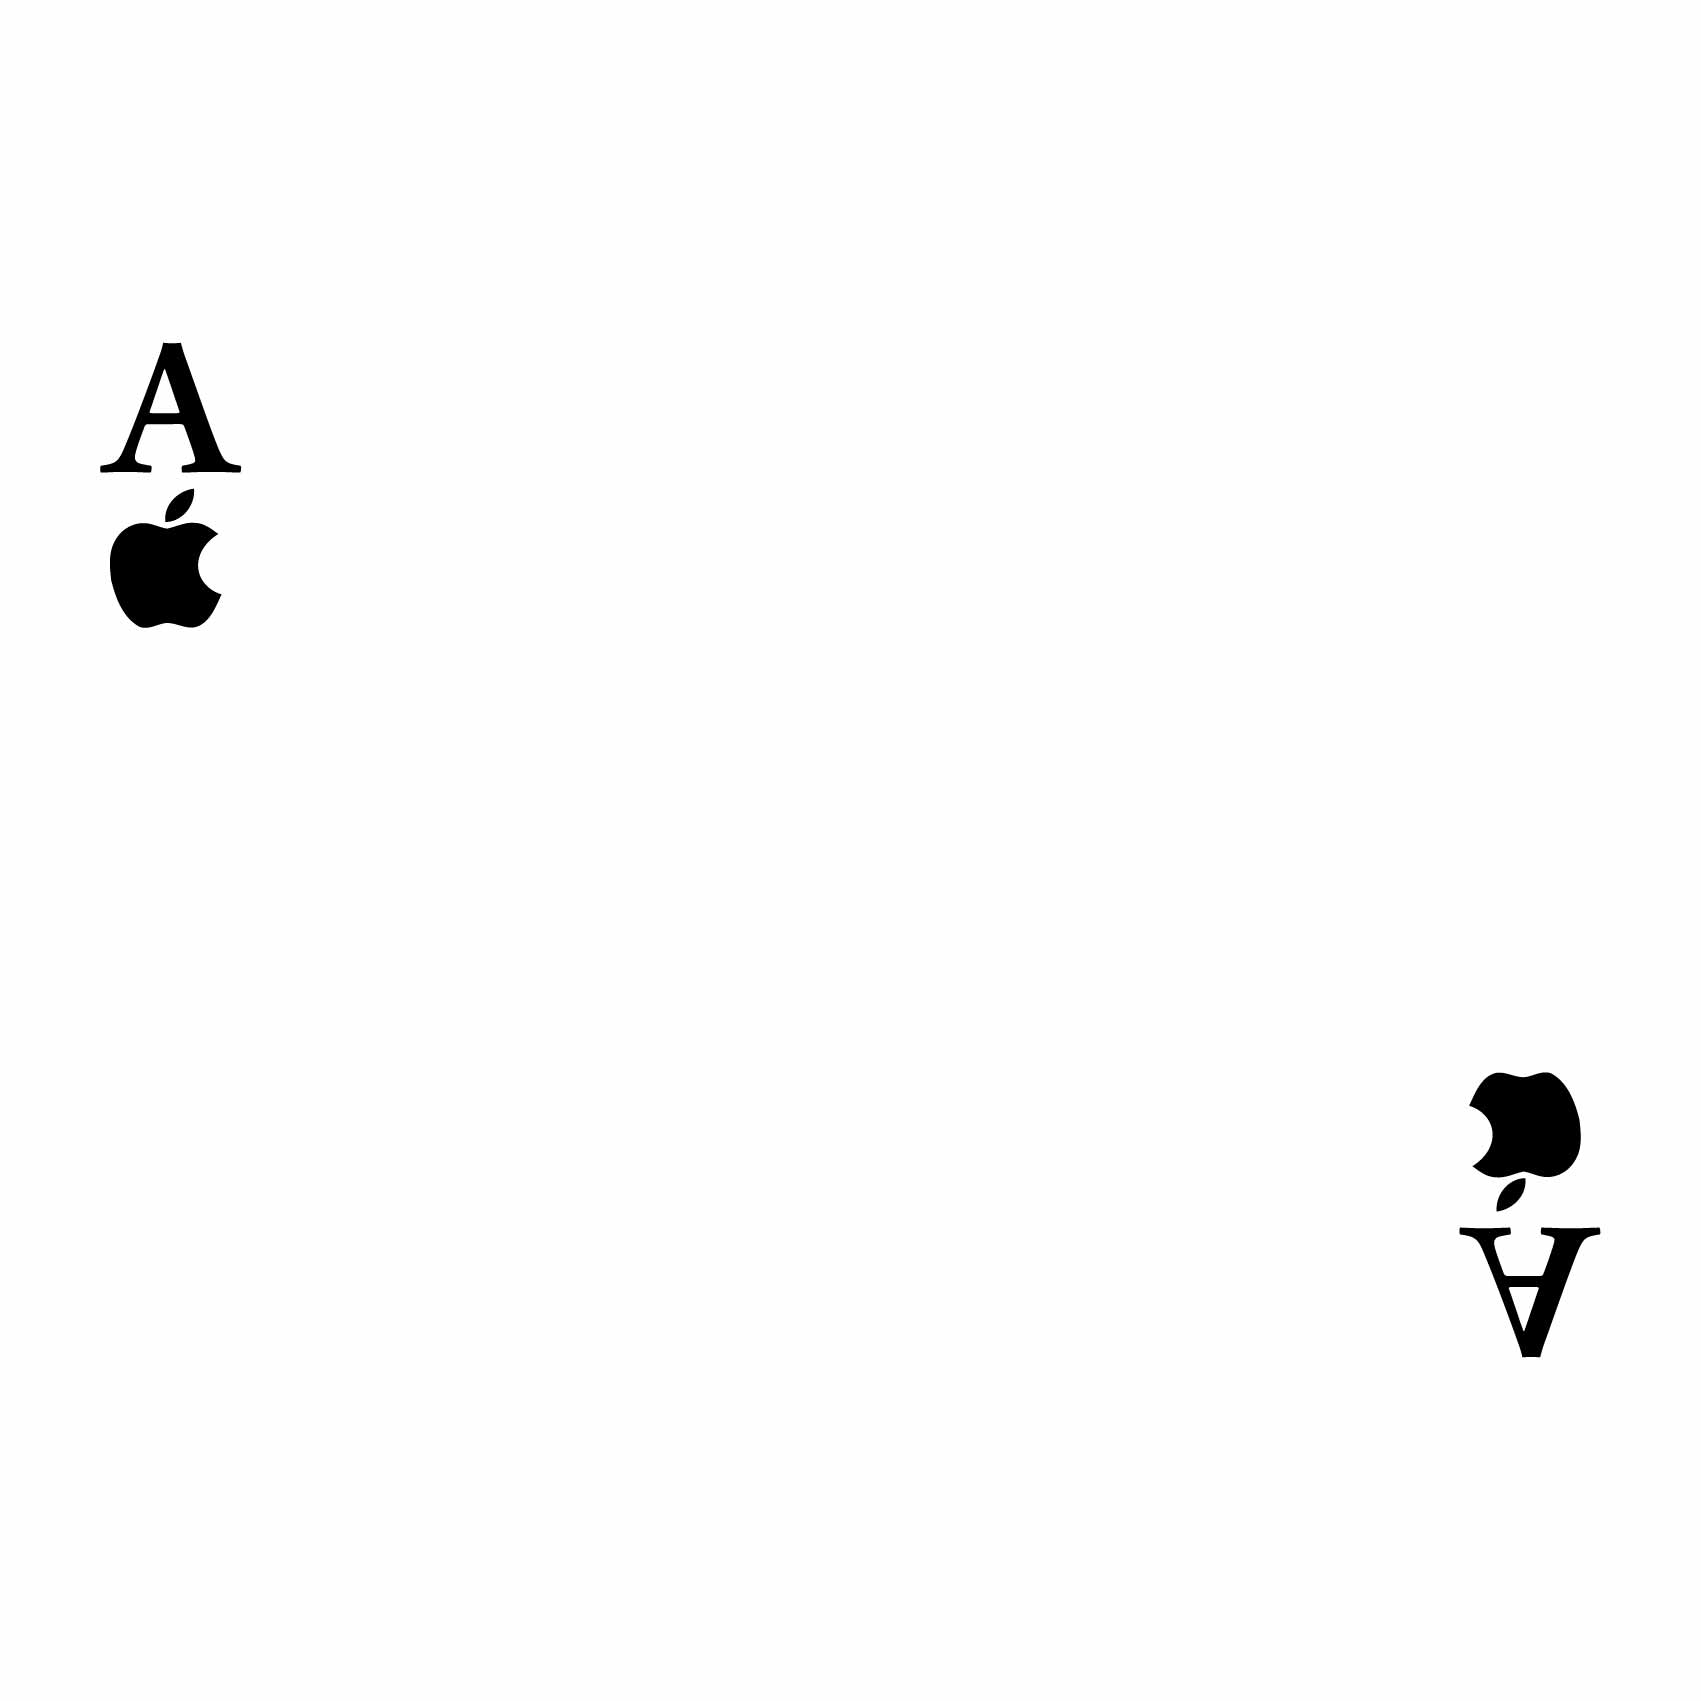 stickers-pour-mac-AS-ref27mac-autocollant-macbook-pro-sticker-ordinateur-portable-macbook-air-(2)